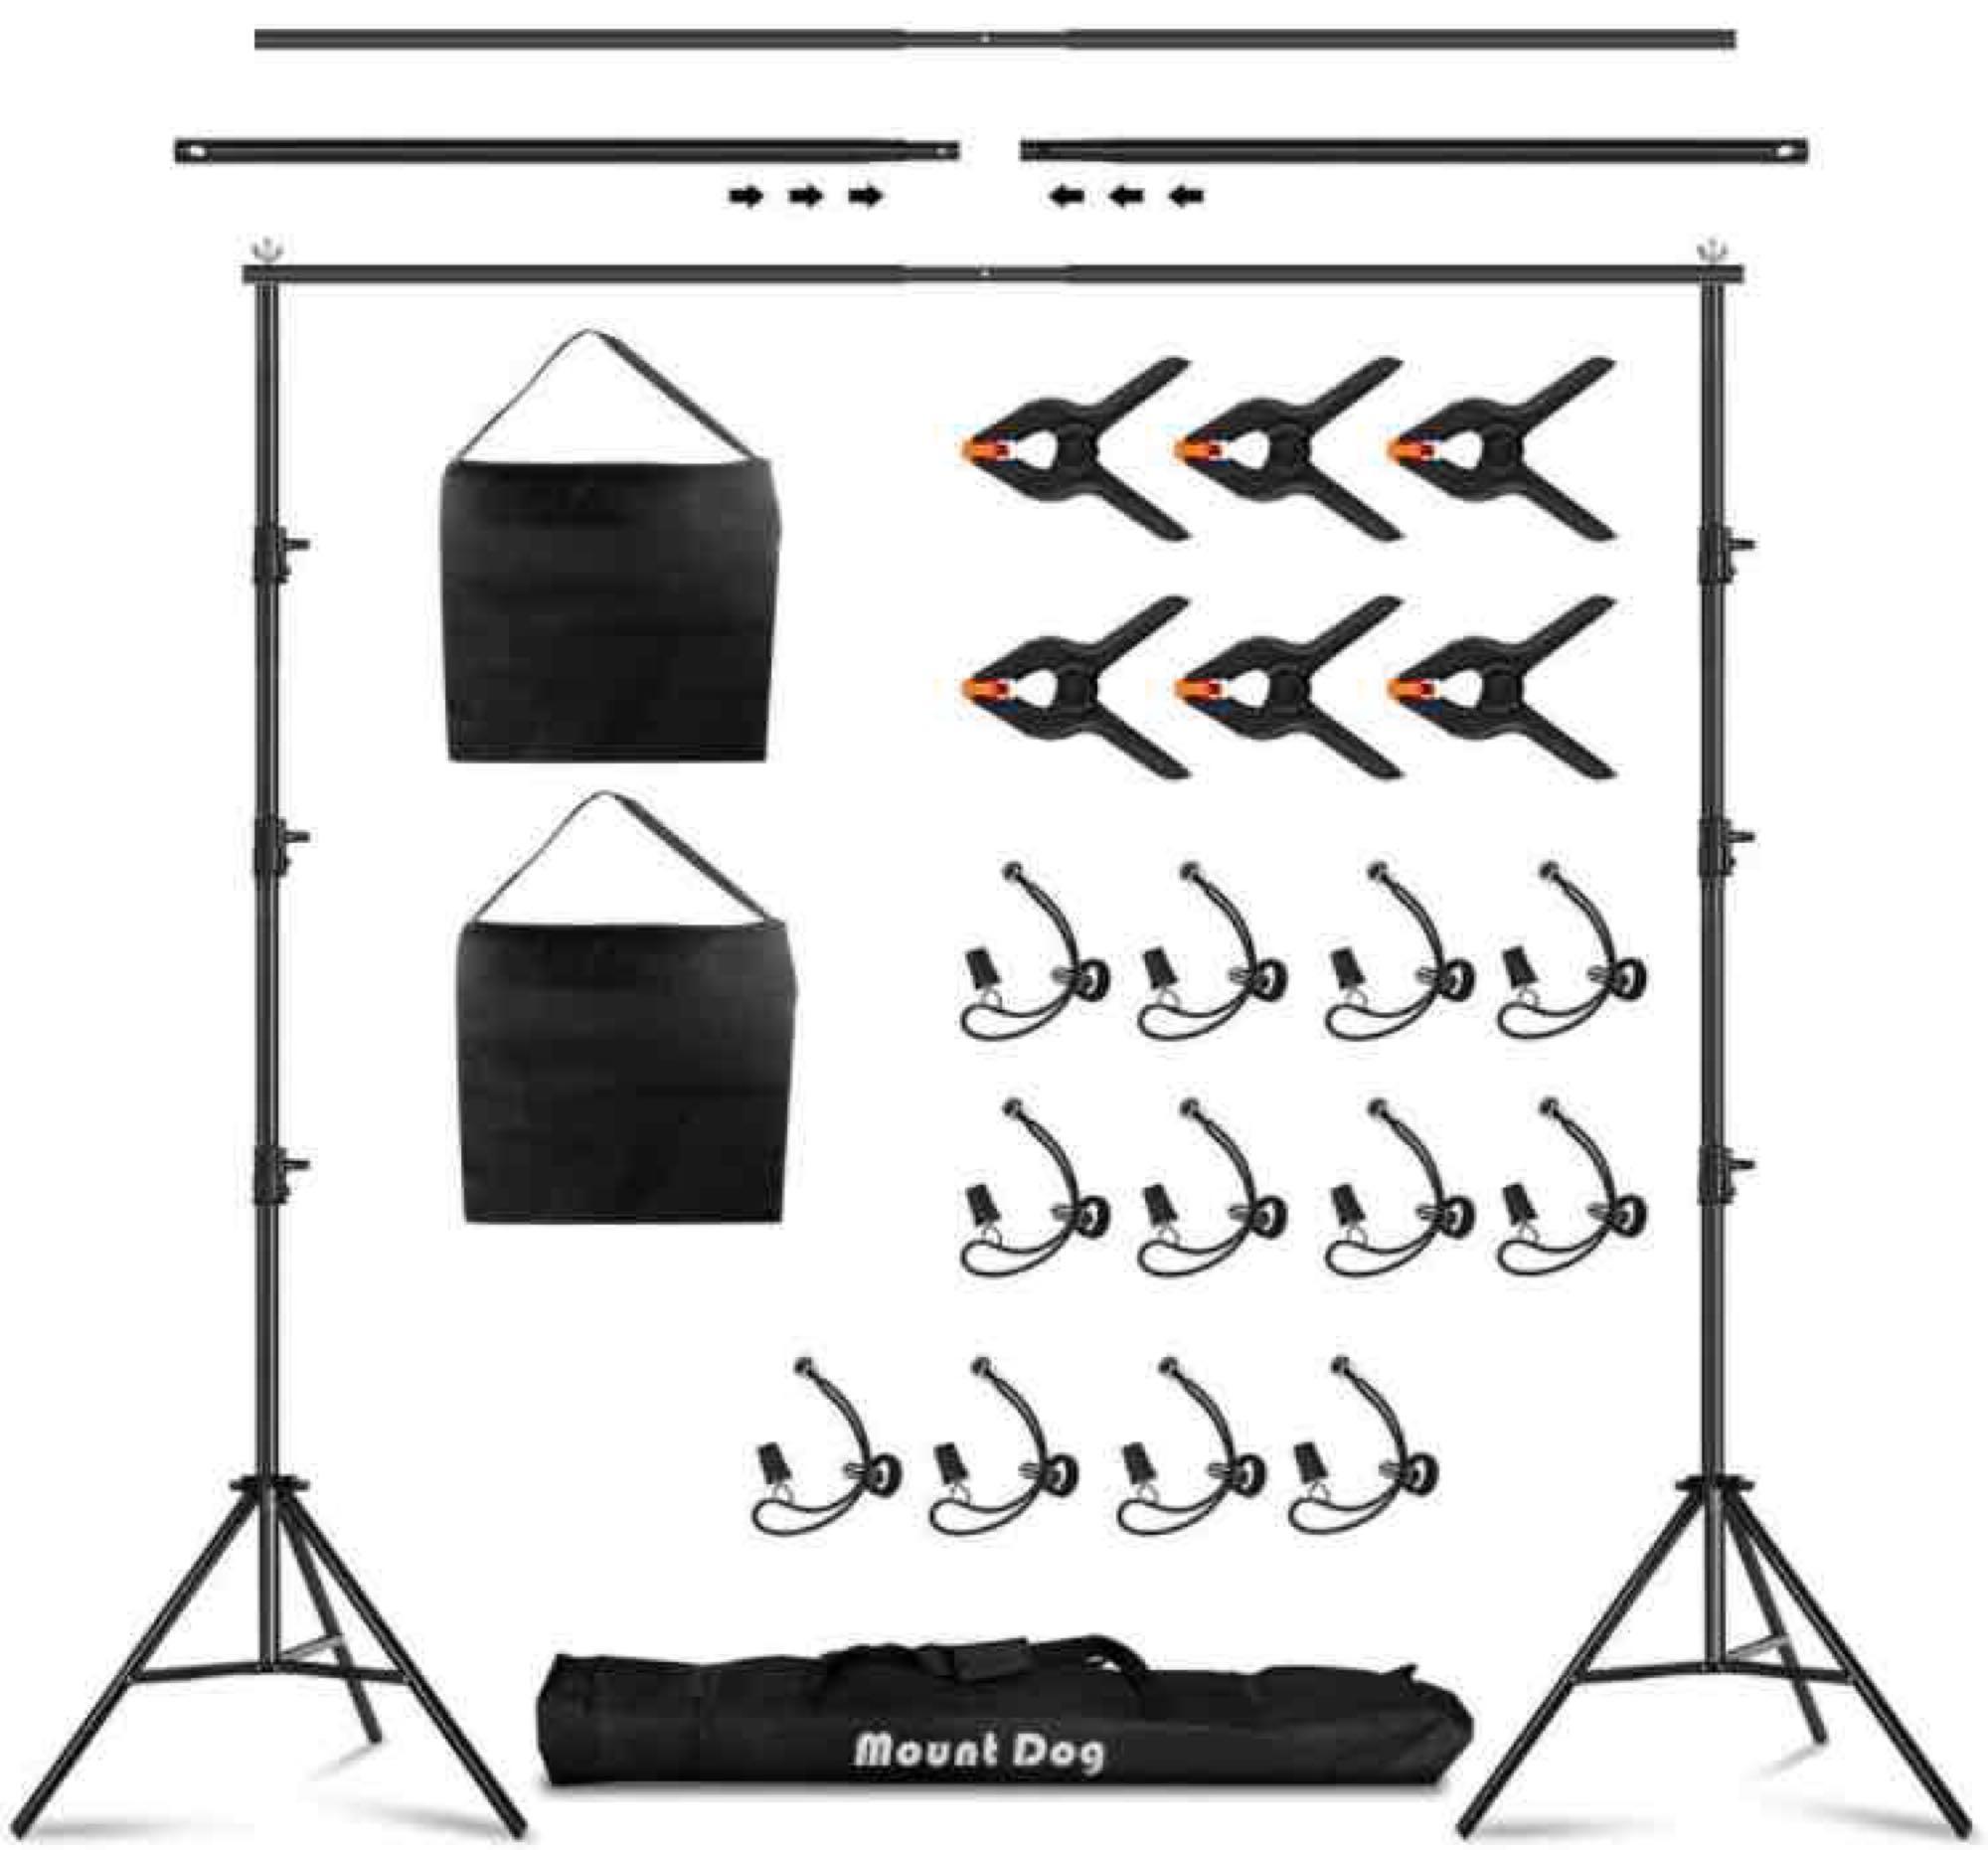 Backdrop Stand, 8.5x10Ft MountDog Photography Backdrop Support System Kit